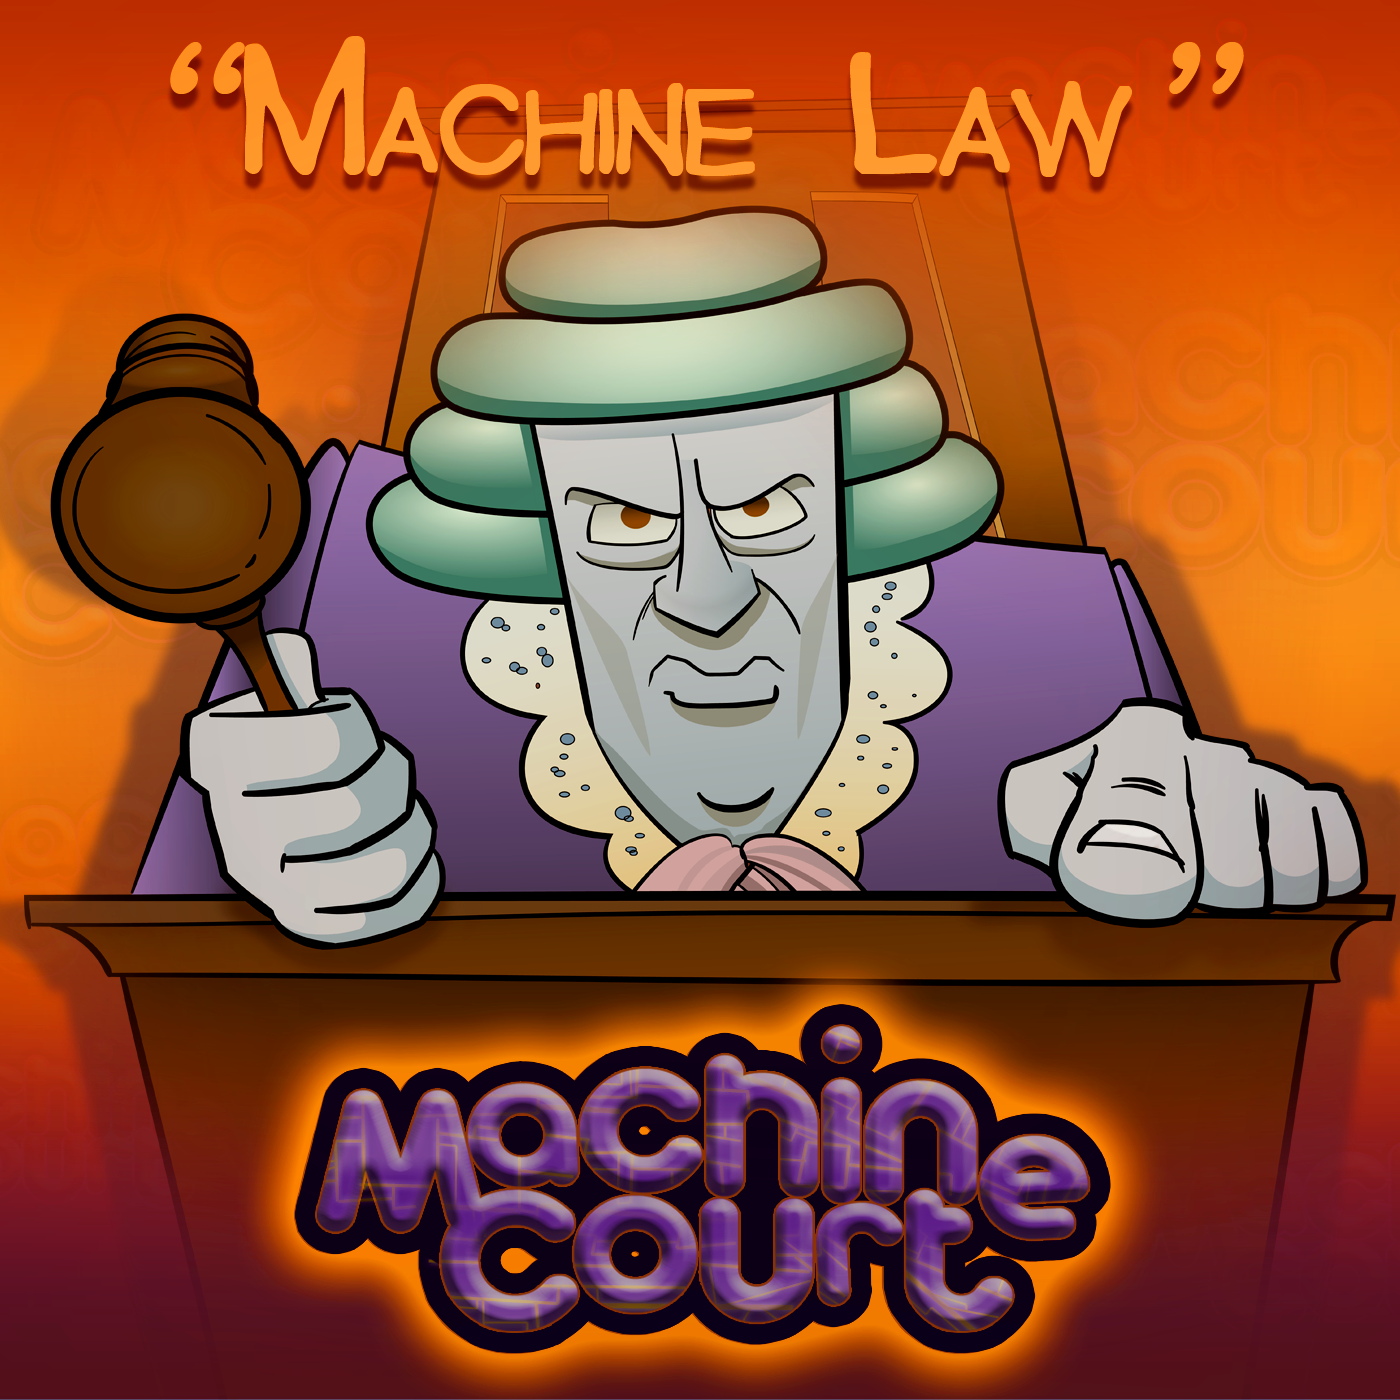 2.9 “Machine Law”